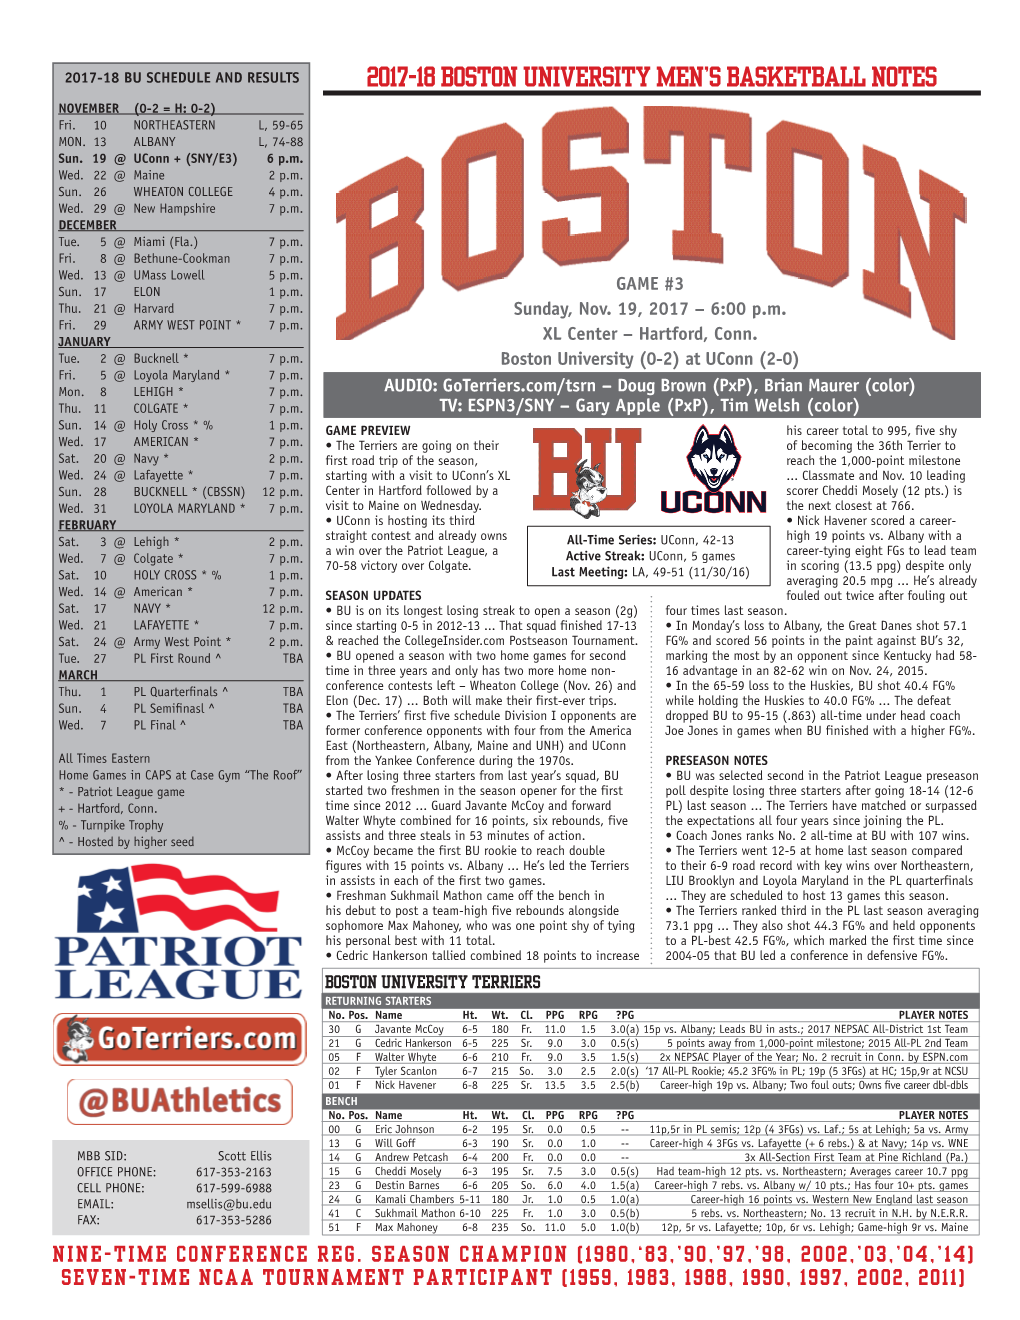 2017-18 Boston University Men's Basketball Notes